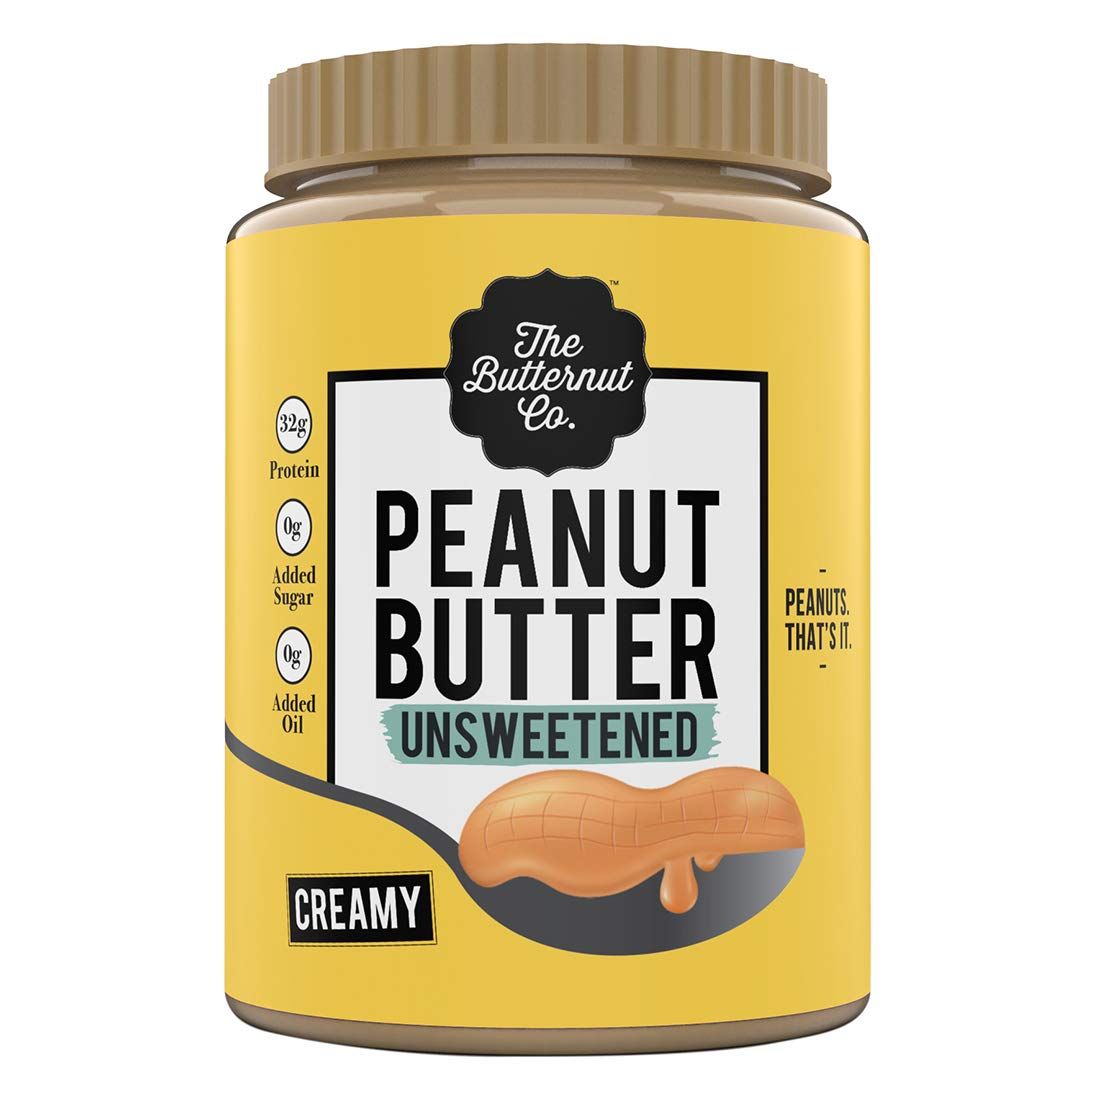 The Butternut Co Peanut Butter Creamy Image